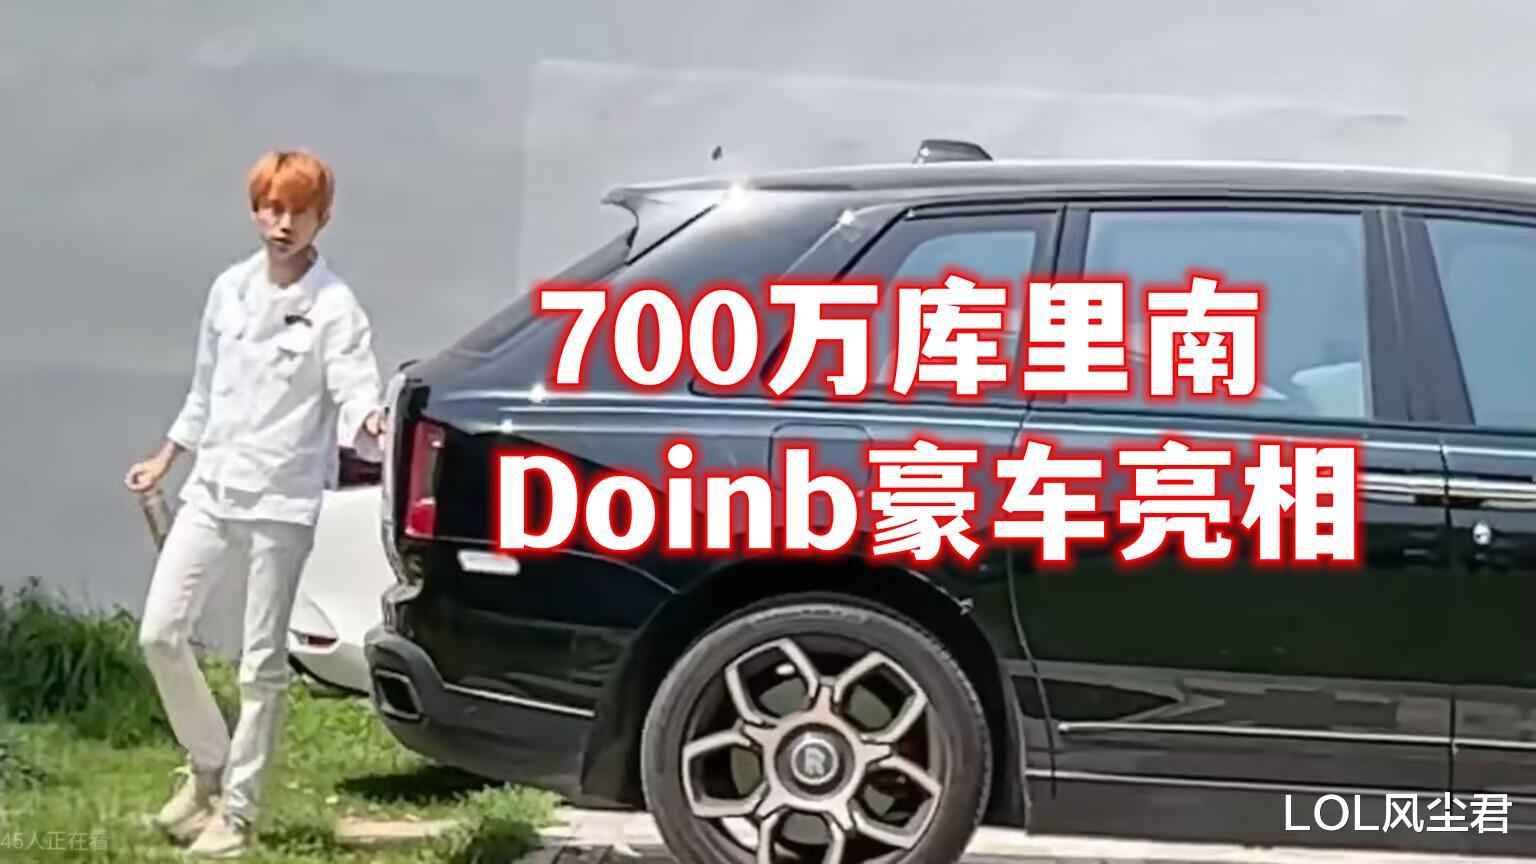 Doinb价值700万库里南亮相！UZI试训亚运会，Rookie韩料店倒闭了(3)